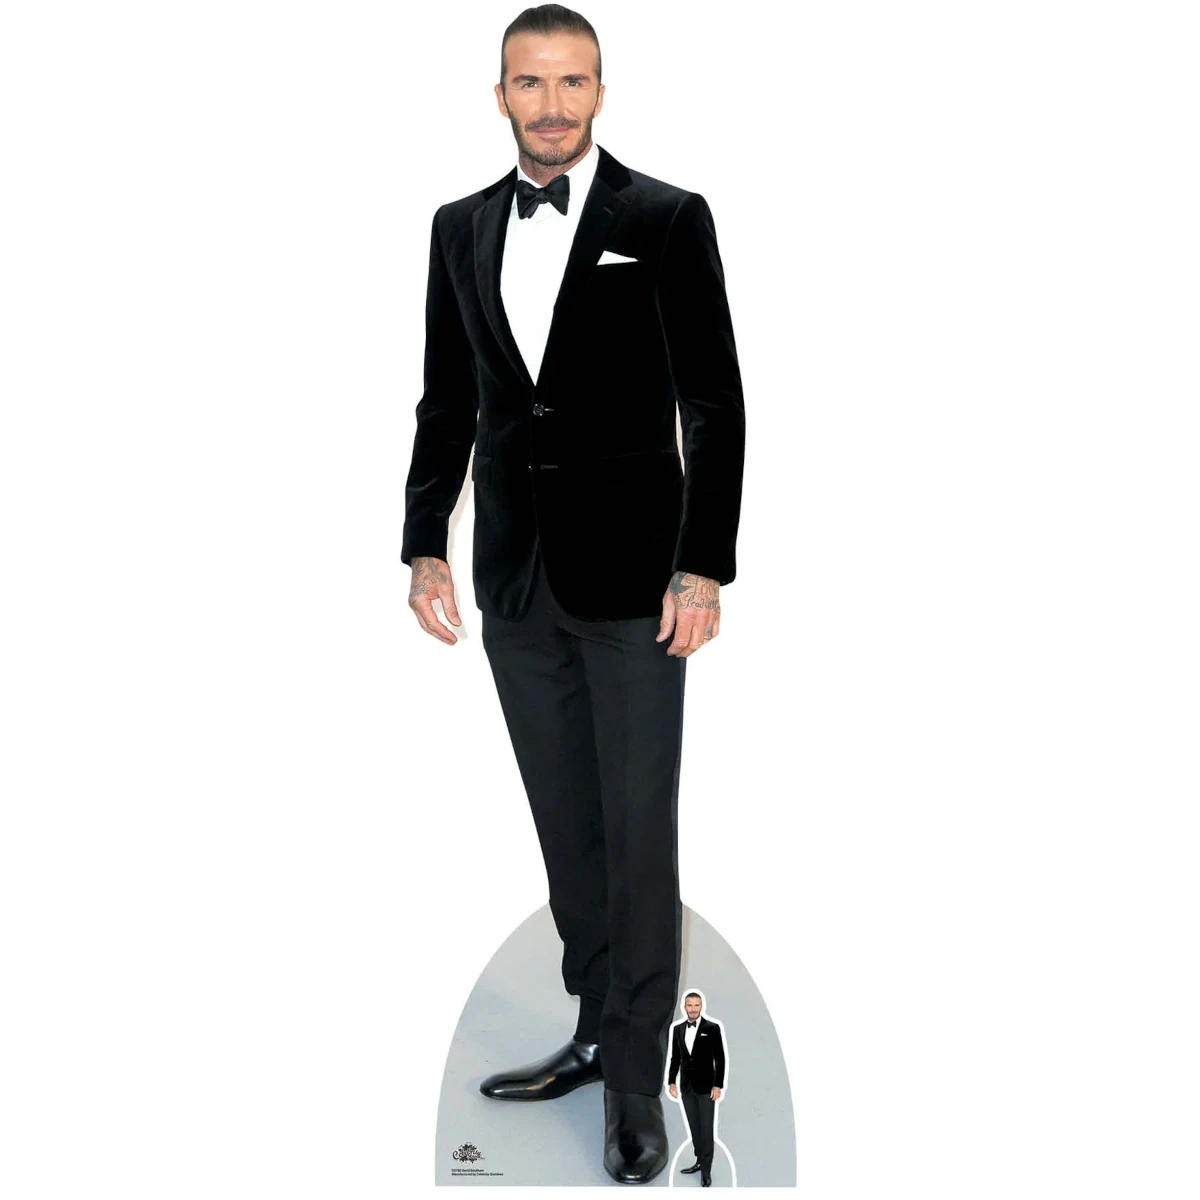 CS782 David Beckham 'Tuxedo' (Former Footballer) Lifesize + Mini Cardboard Cutout Standee Front